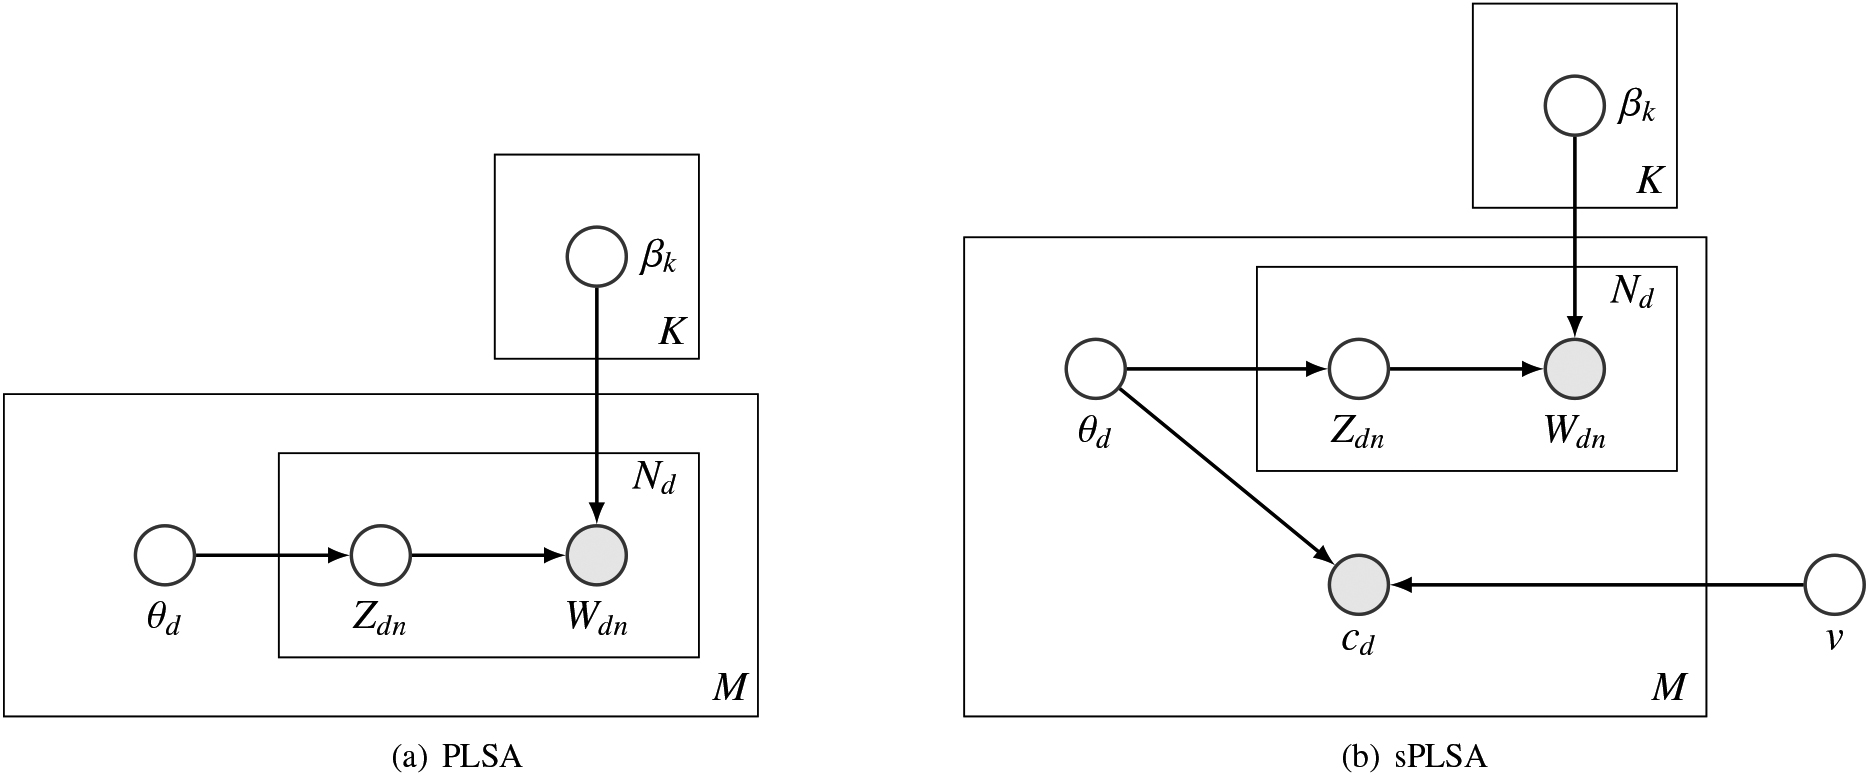 Graphical model representation of (a) PLSA and (b) sPLSA.